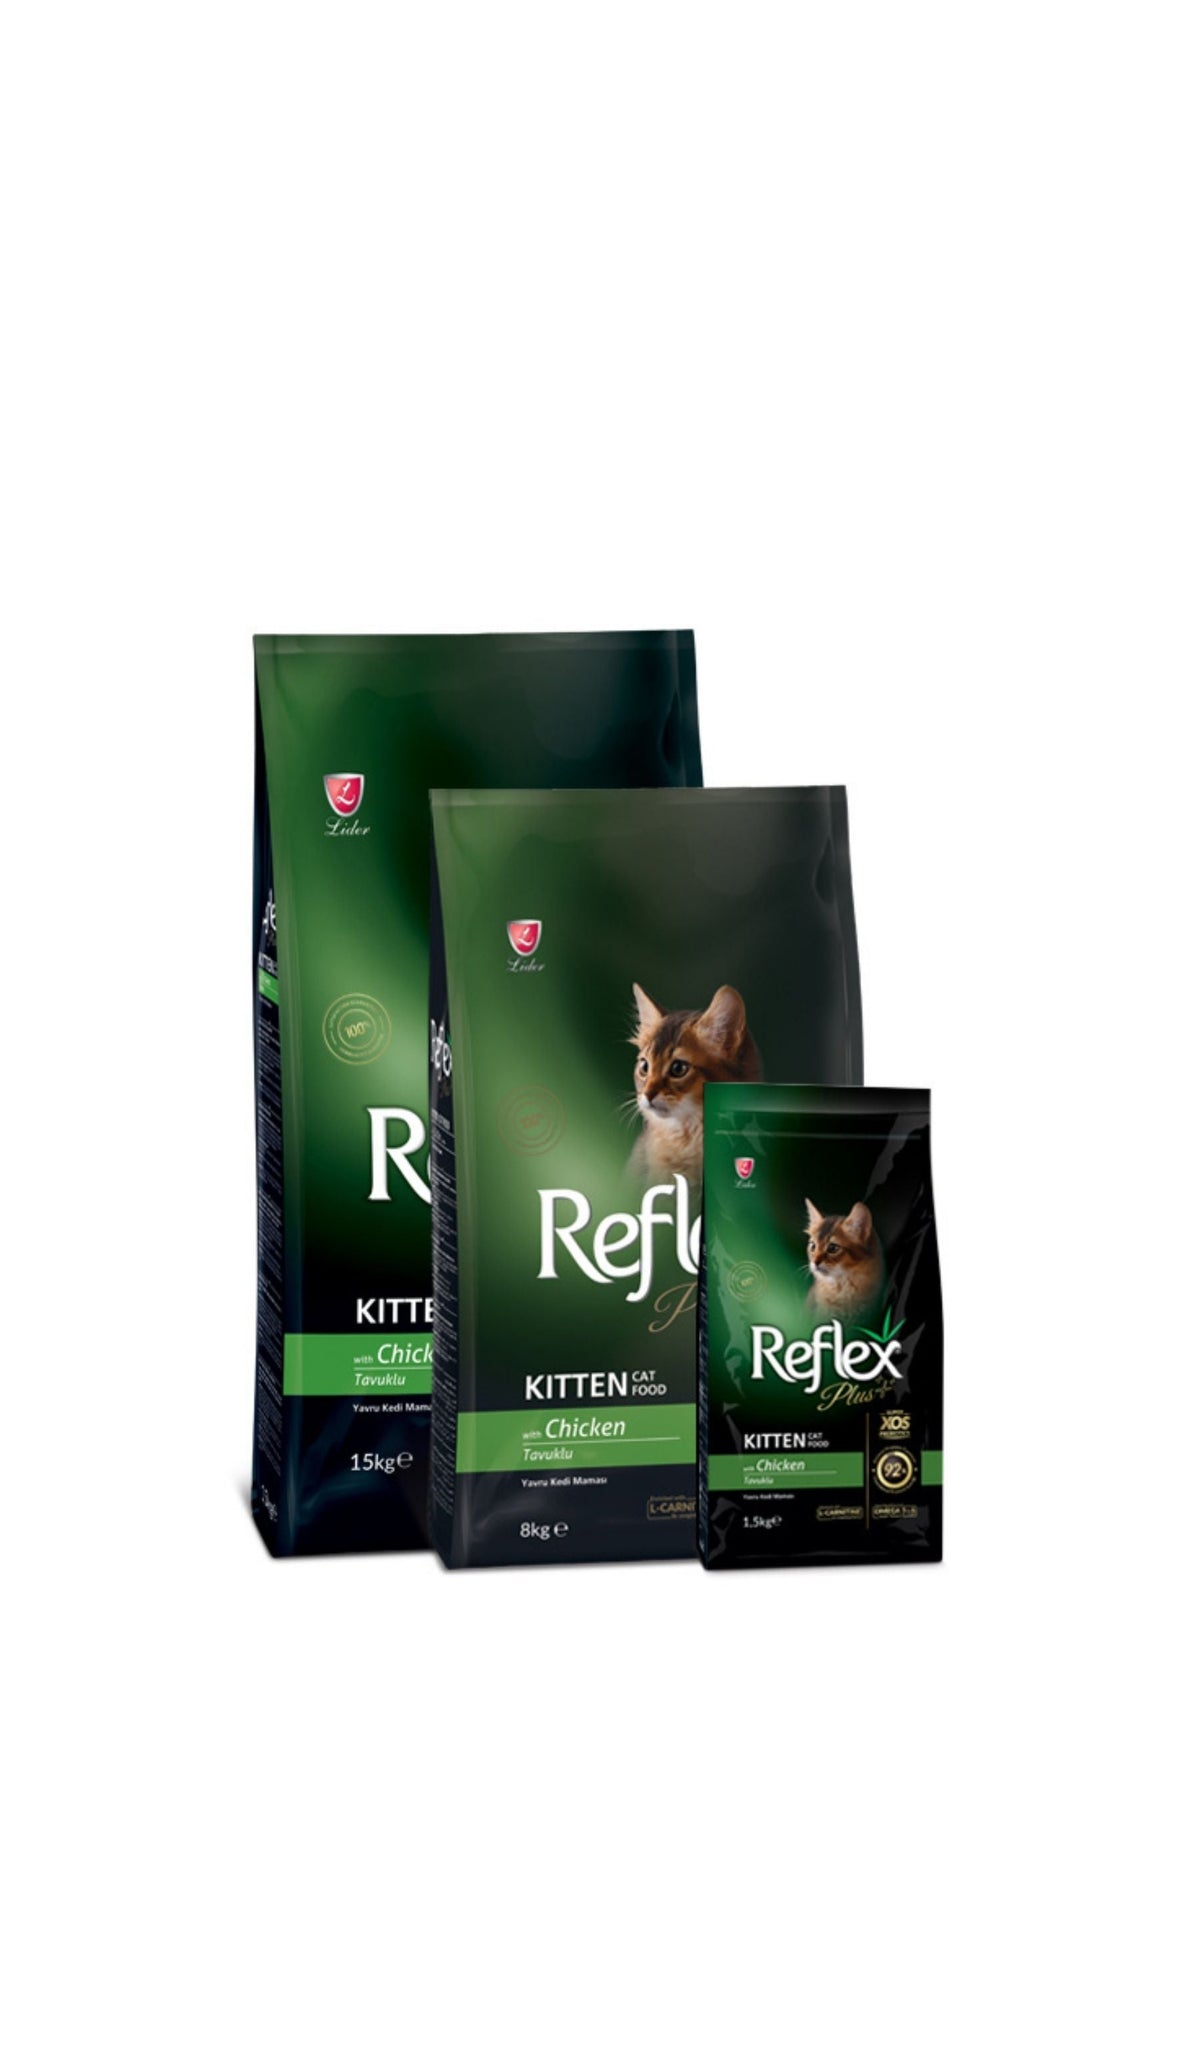 Reflex Plus Kitten Chicken petbay.lk